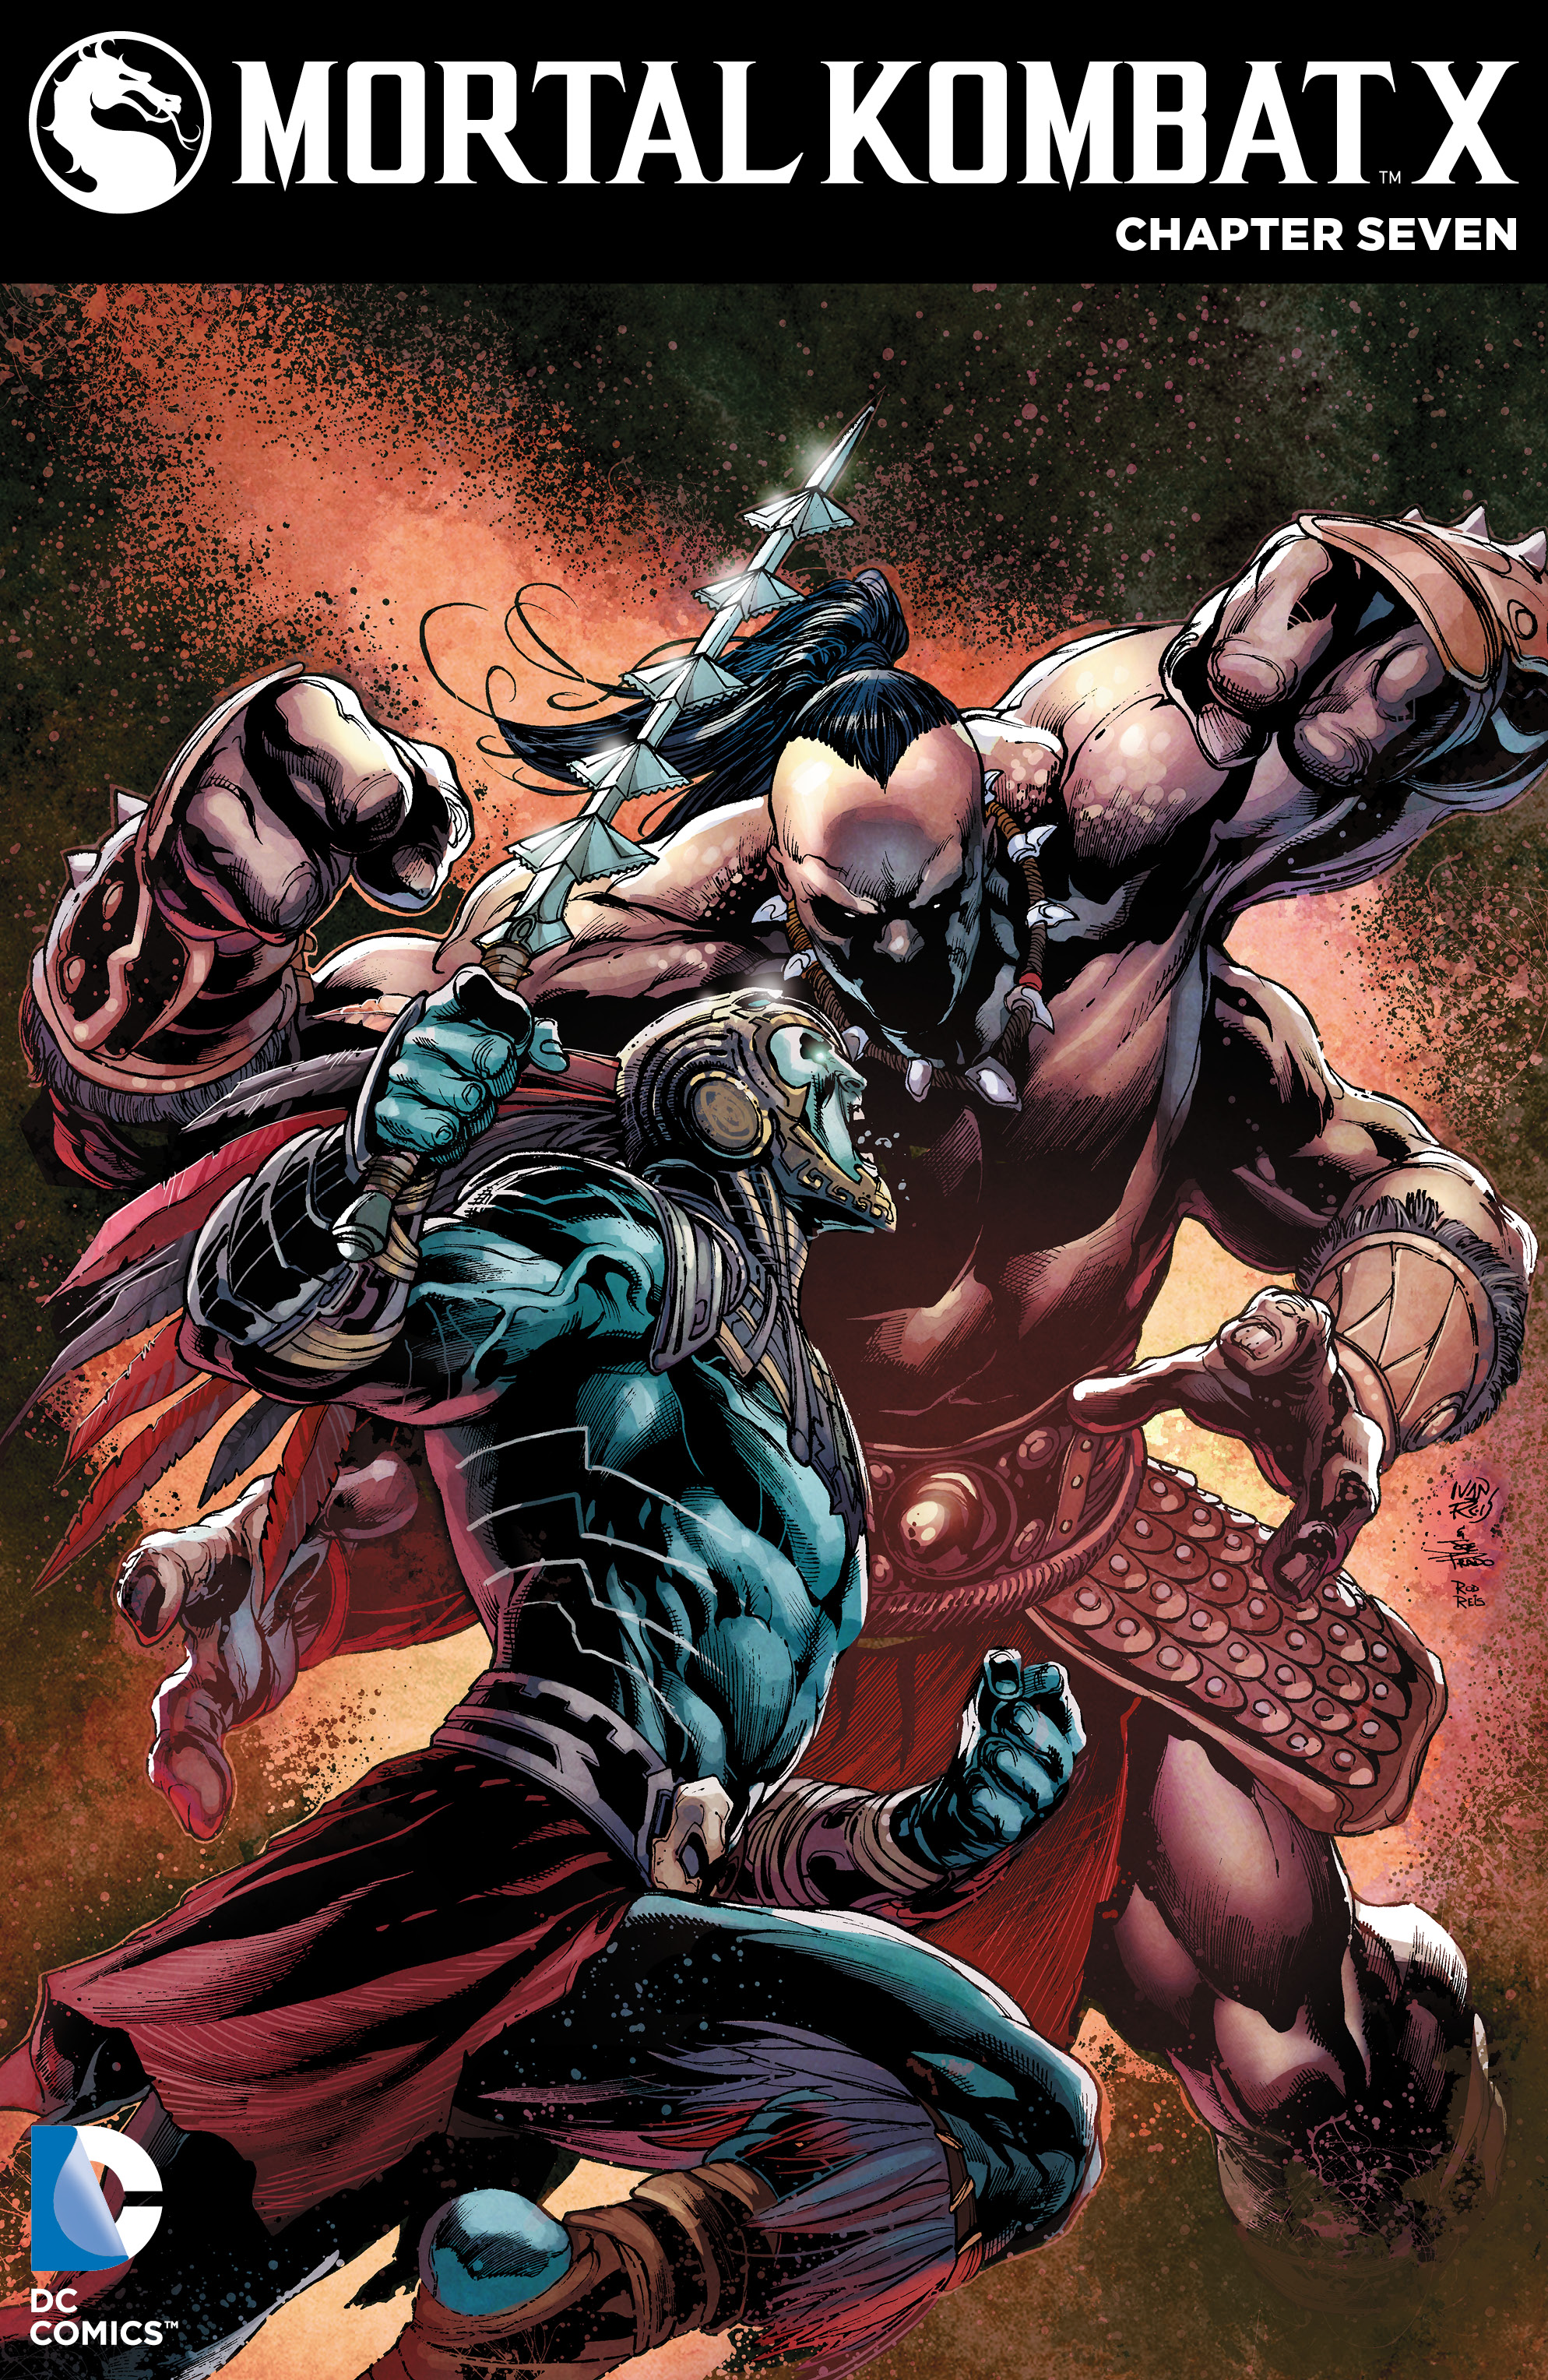 Mortal Kombat X #7 preview images